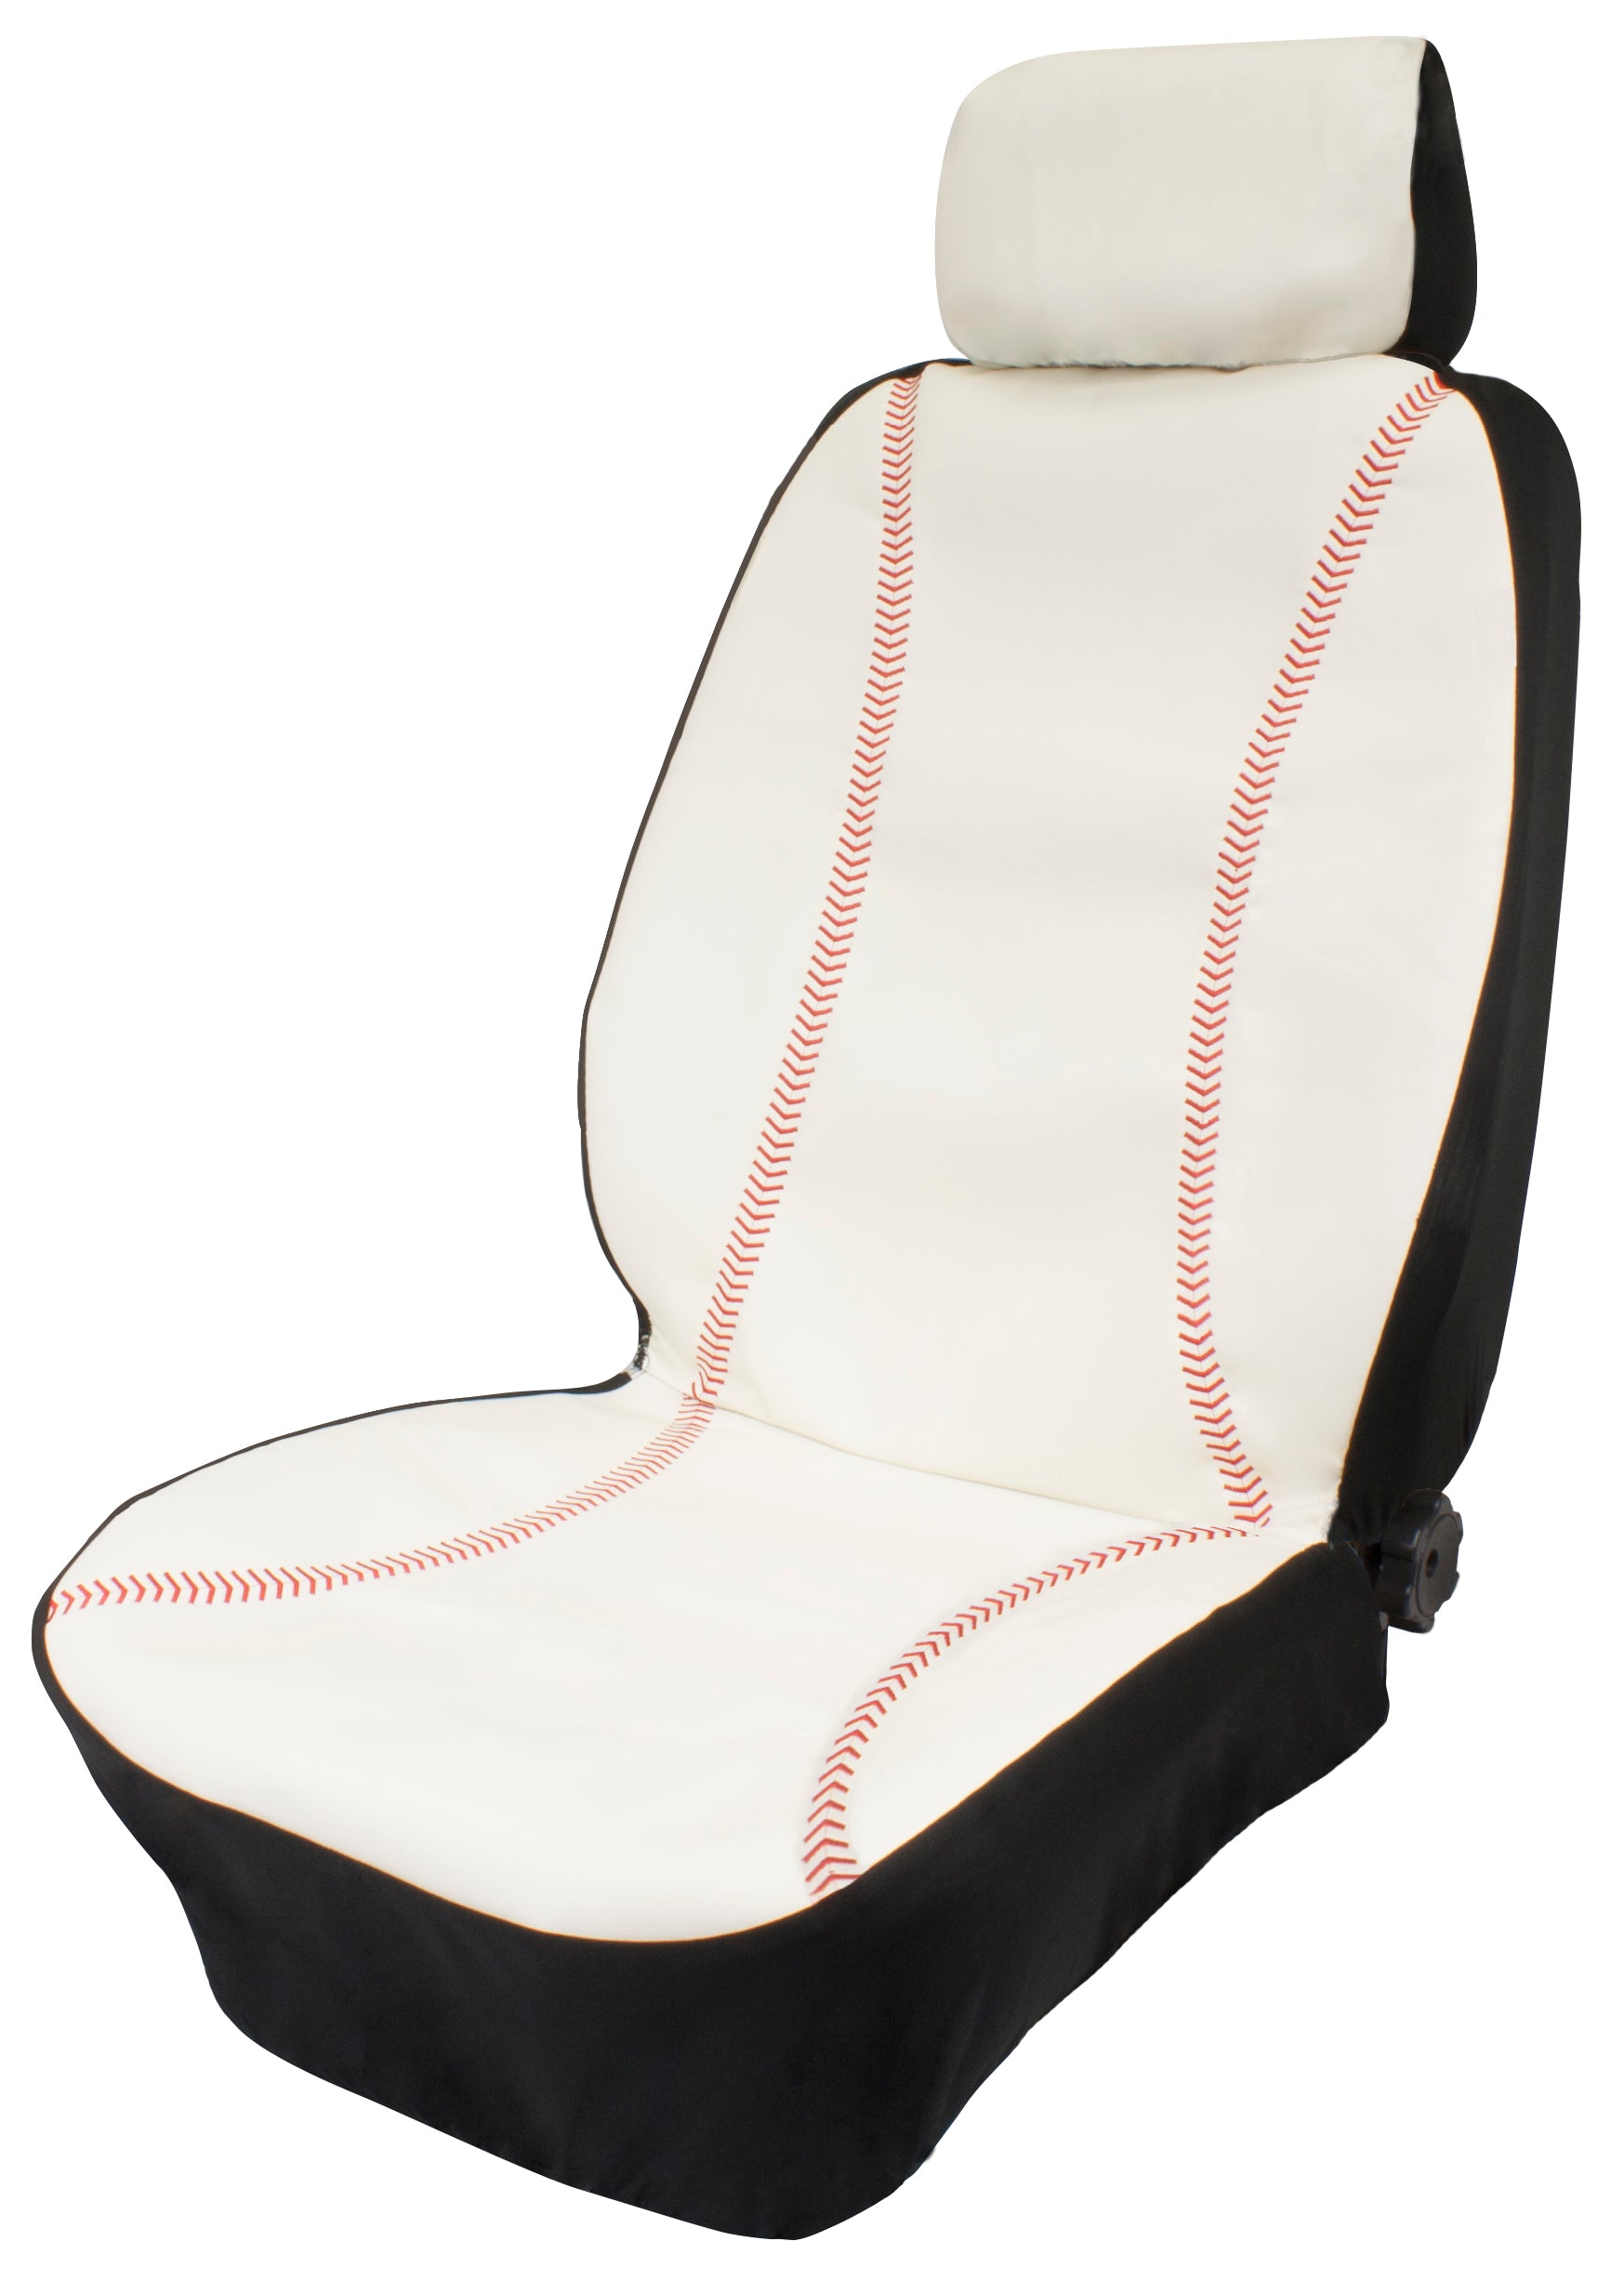 Eurow Sheepskin Seat Cover New XL Design Premium Pelt - Gray